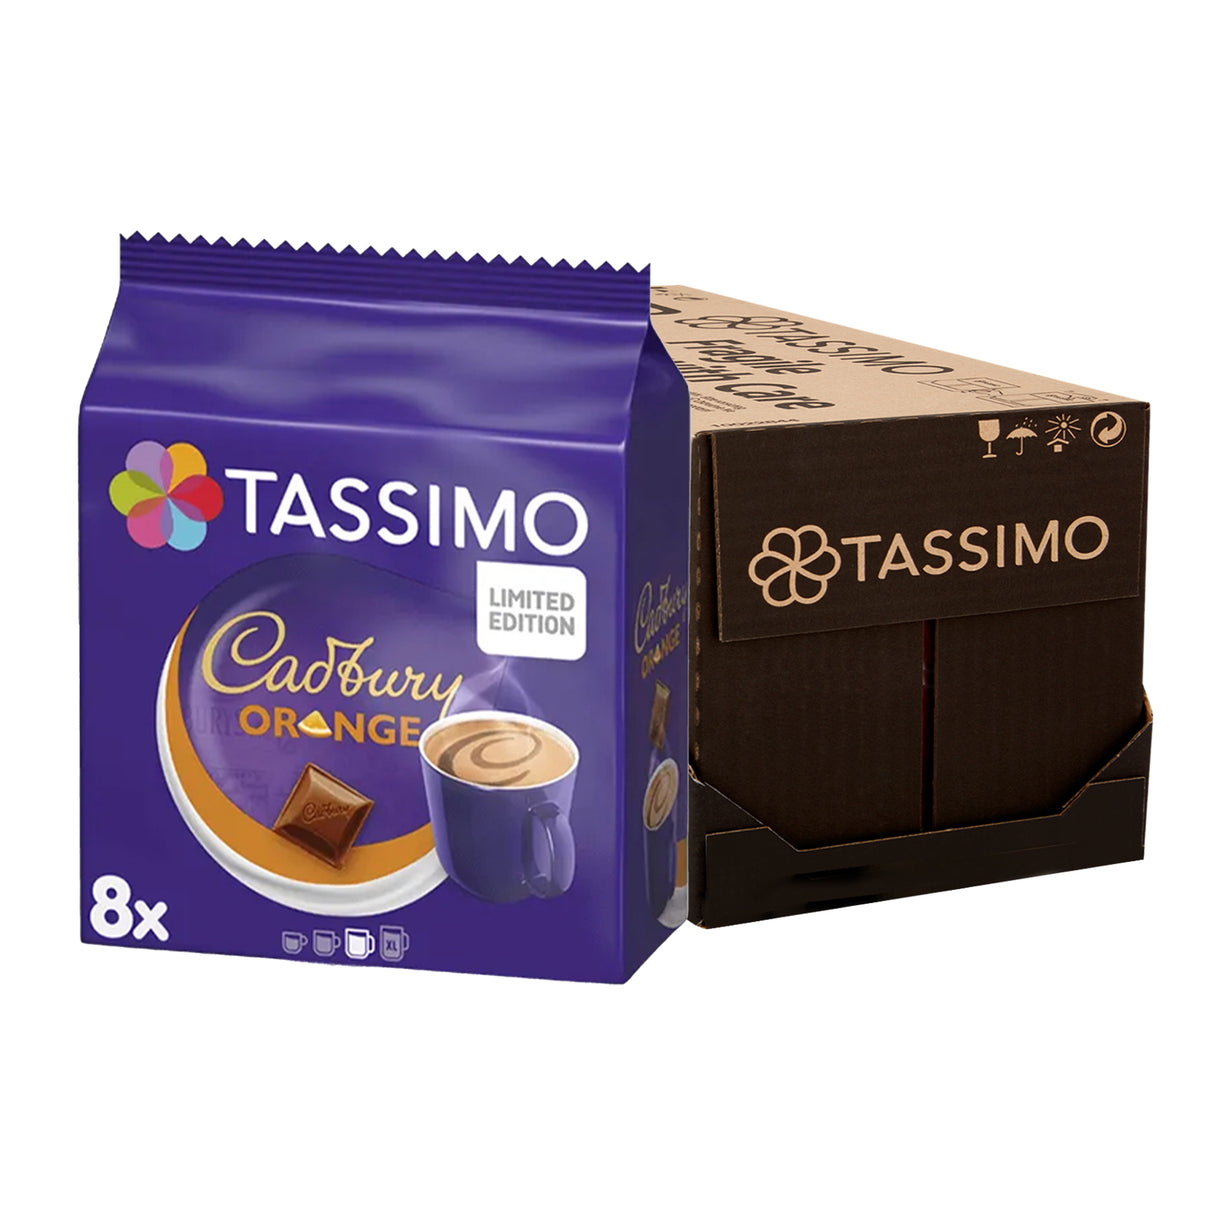 Tassimo Cadbury Orange Hot Chocolate pods Case